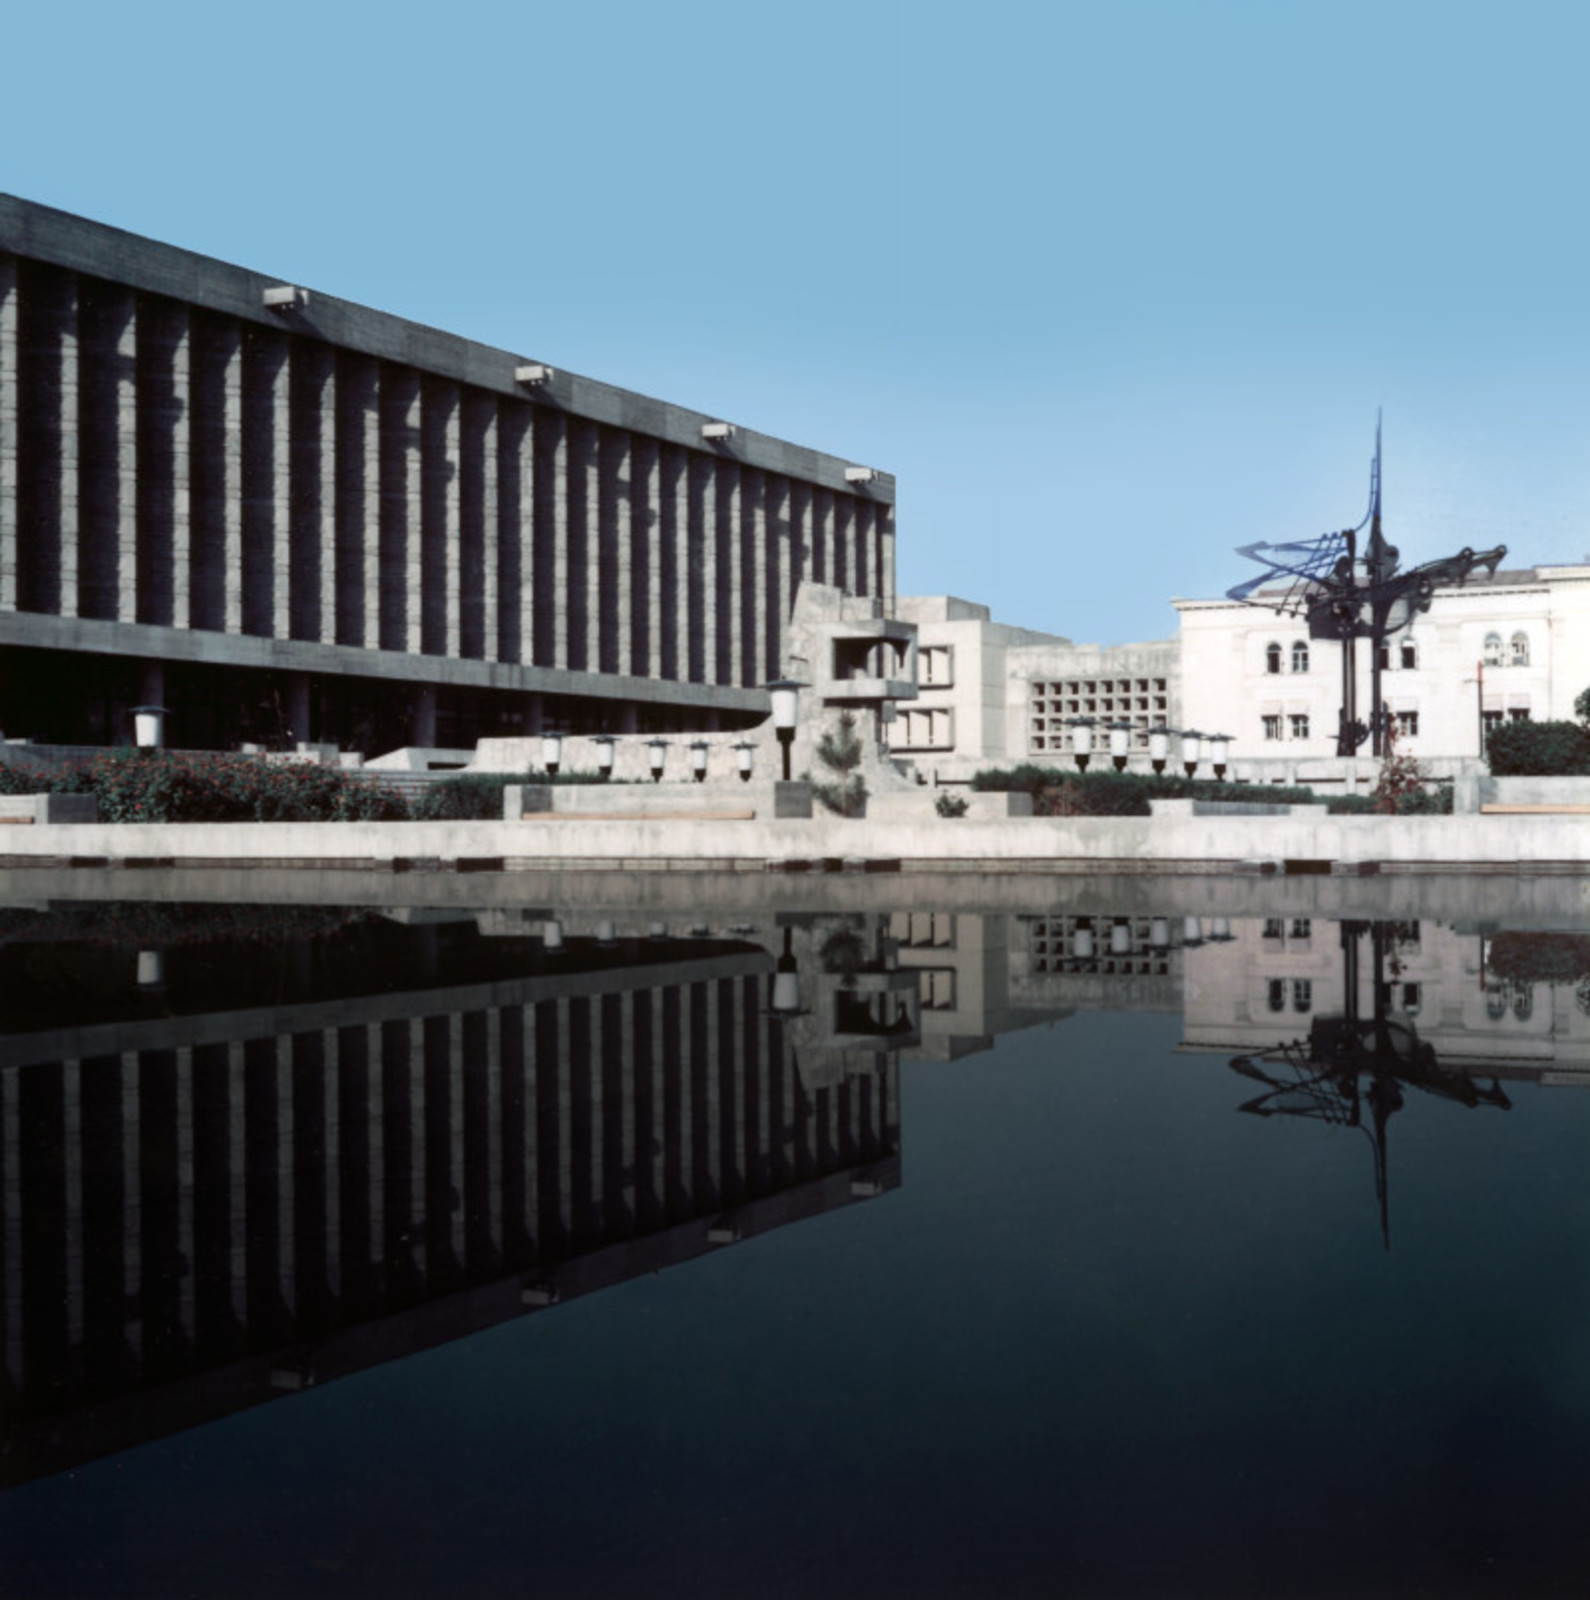 Karl Marx Library (Ashgabat, Turkmenistan) Architects: Abdullah Akhmedov, Boris Shpak, Vladimir Alekseyev 1960-1975 Sculptor: Vadim Kosmatschof (1975) Archive Kosmatschof